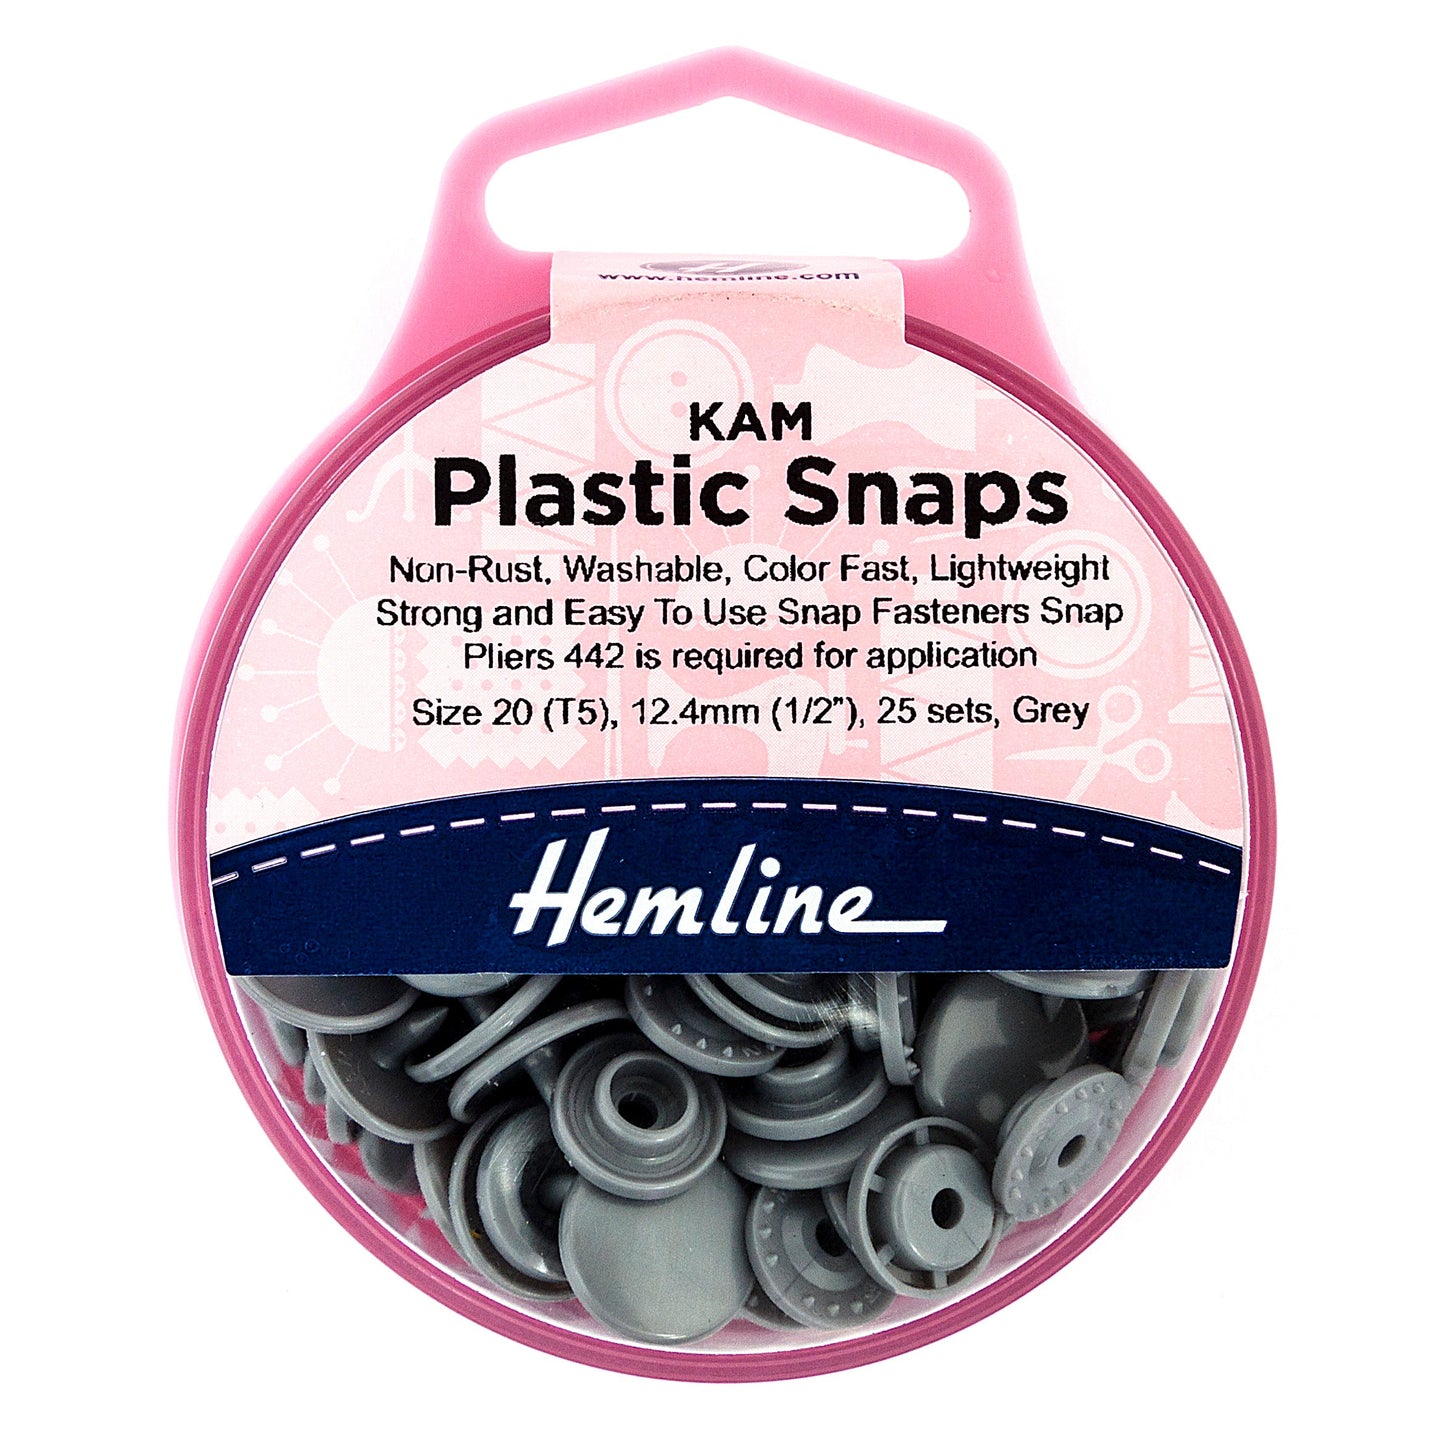 Hemline Plastic Snaps 25 x 12.4mm sets | EN71, REACH & Annex II Compliant